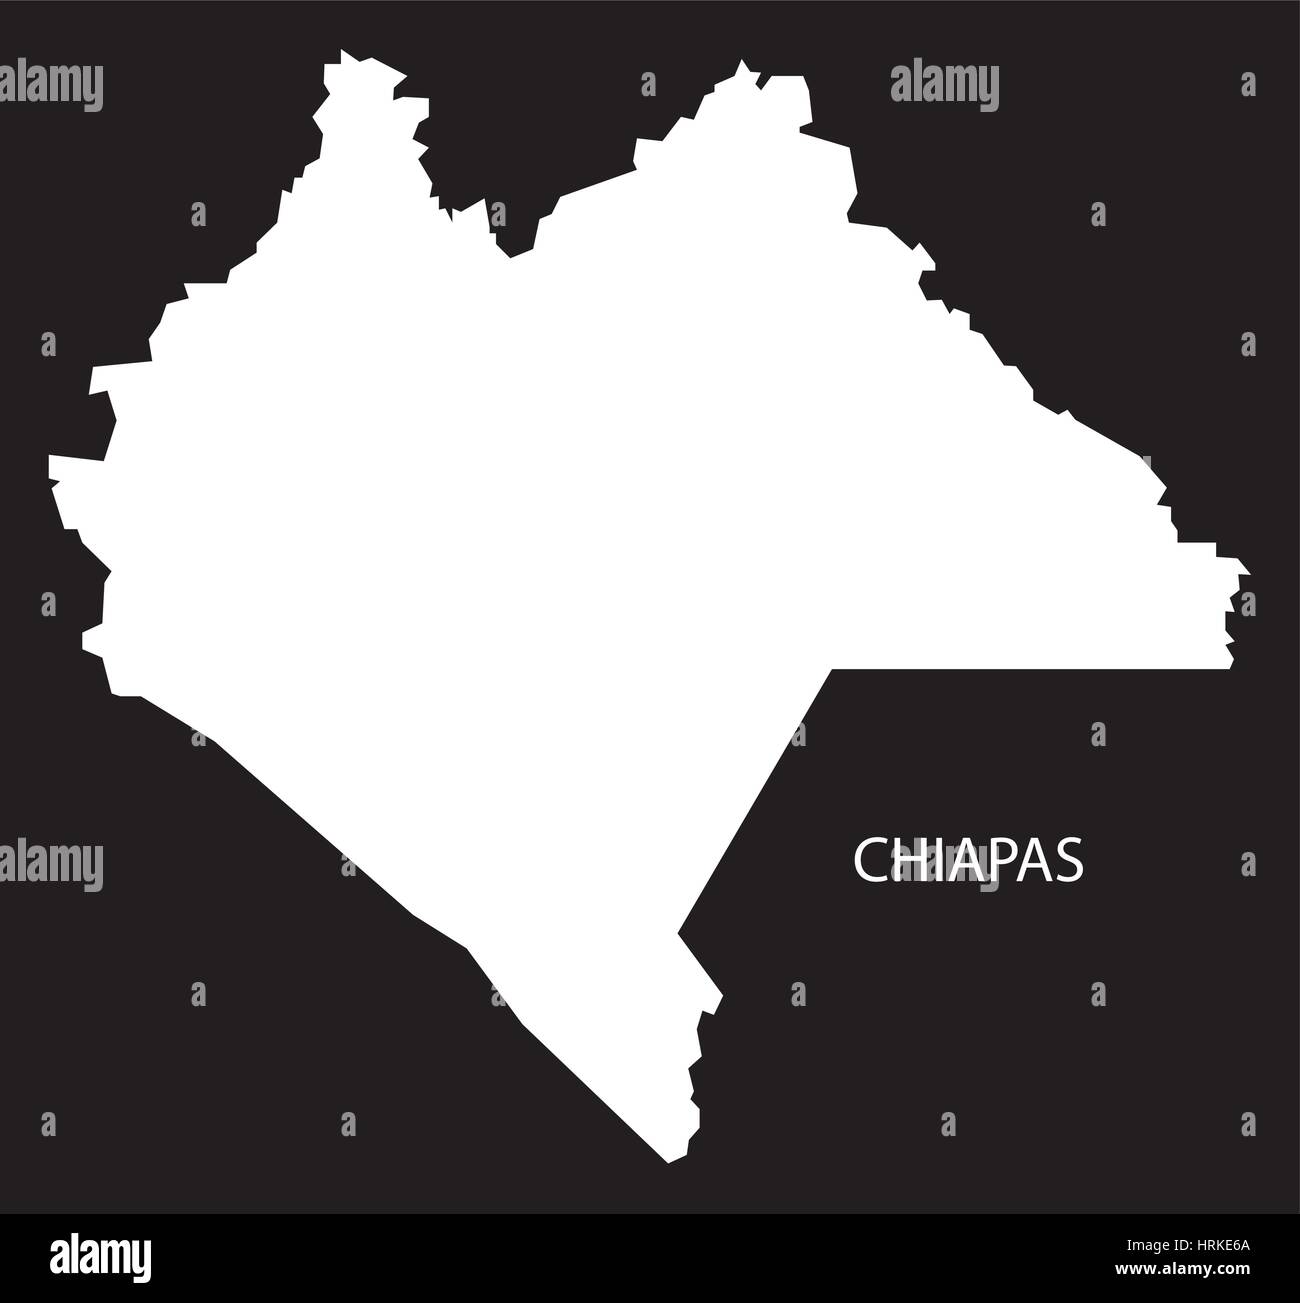 Chiapas Mexiko Karte schwarz invertiert silhouette Stock Vektor